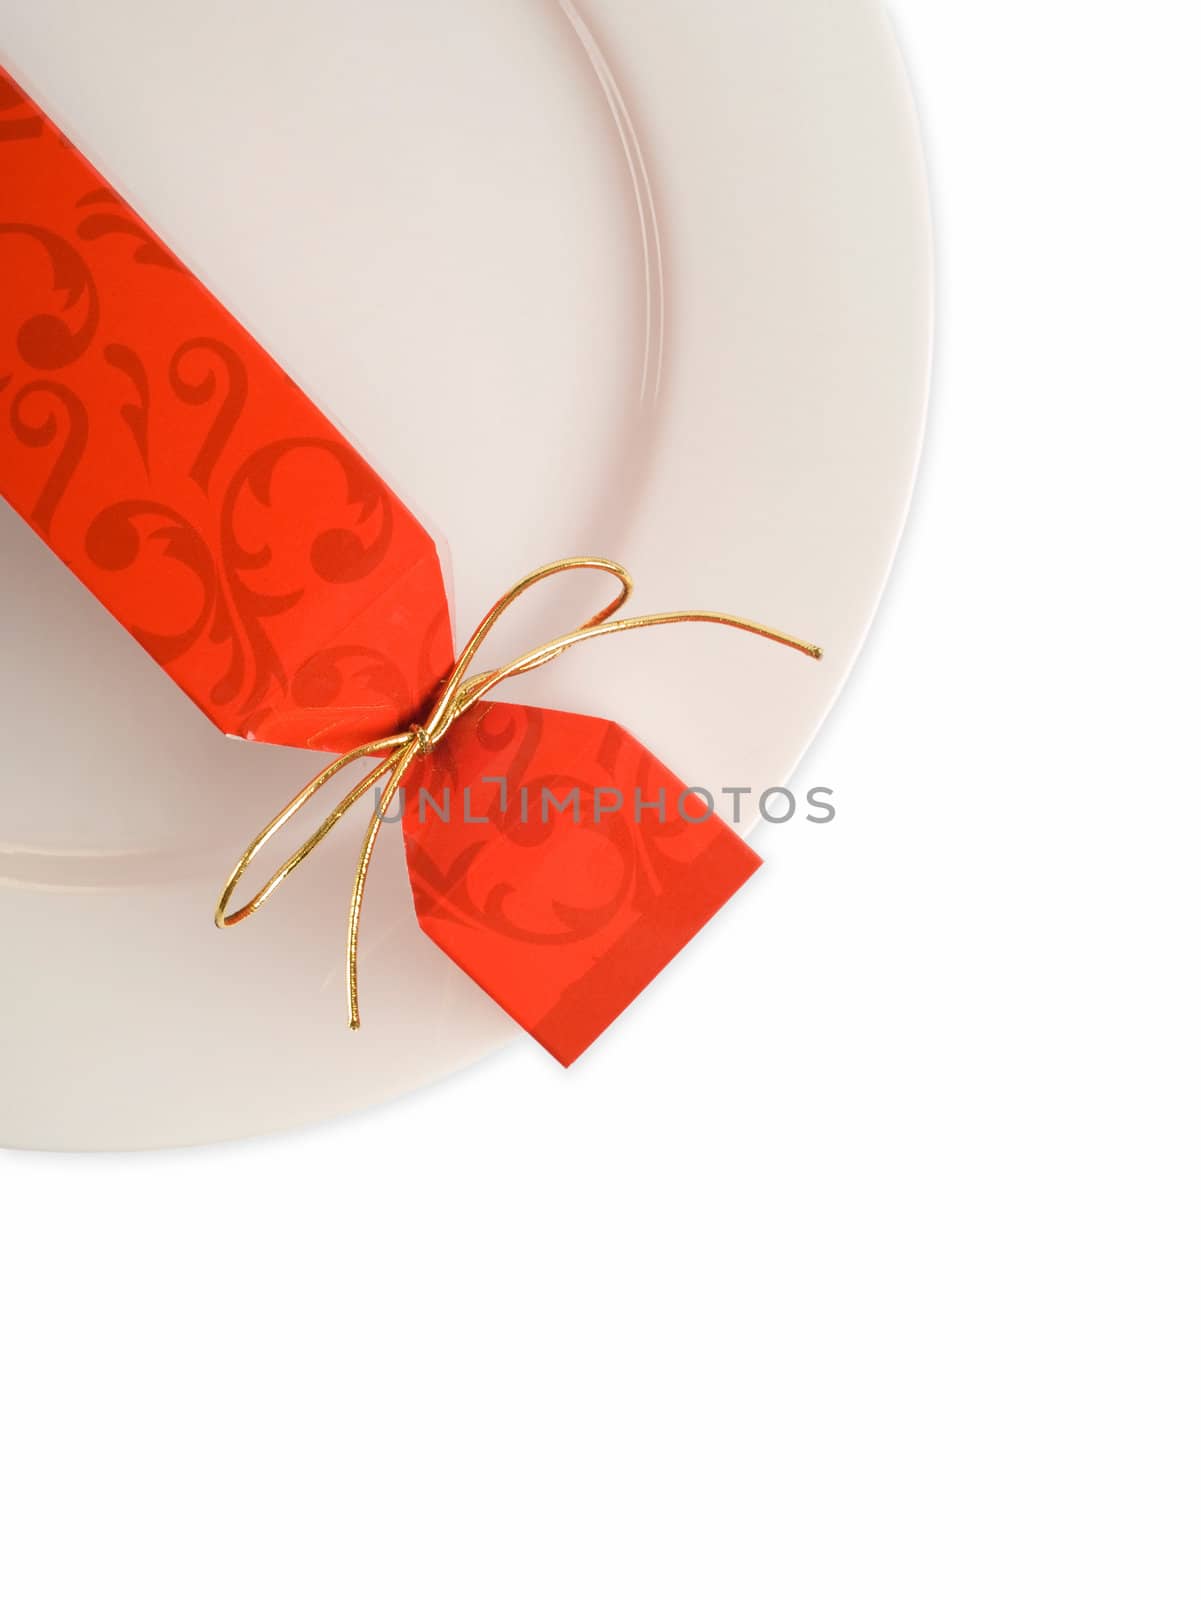 Christmas or party cracker on white dinner plate